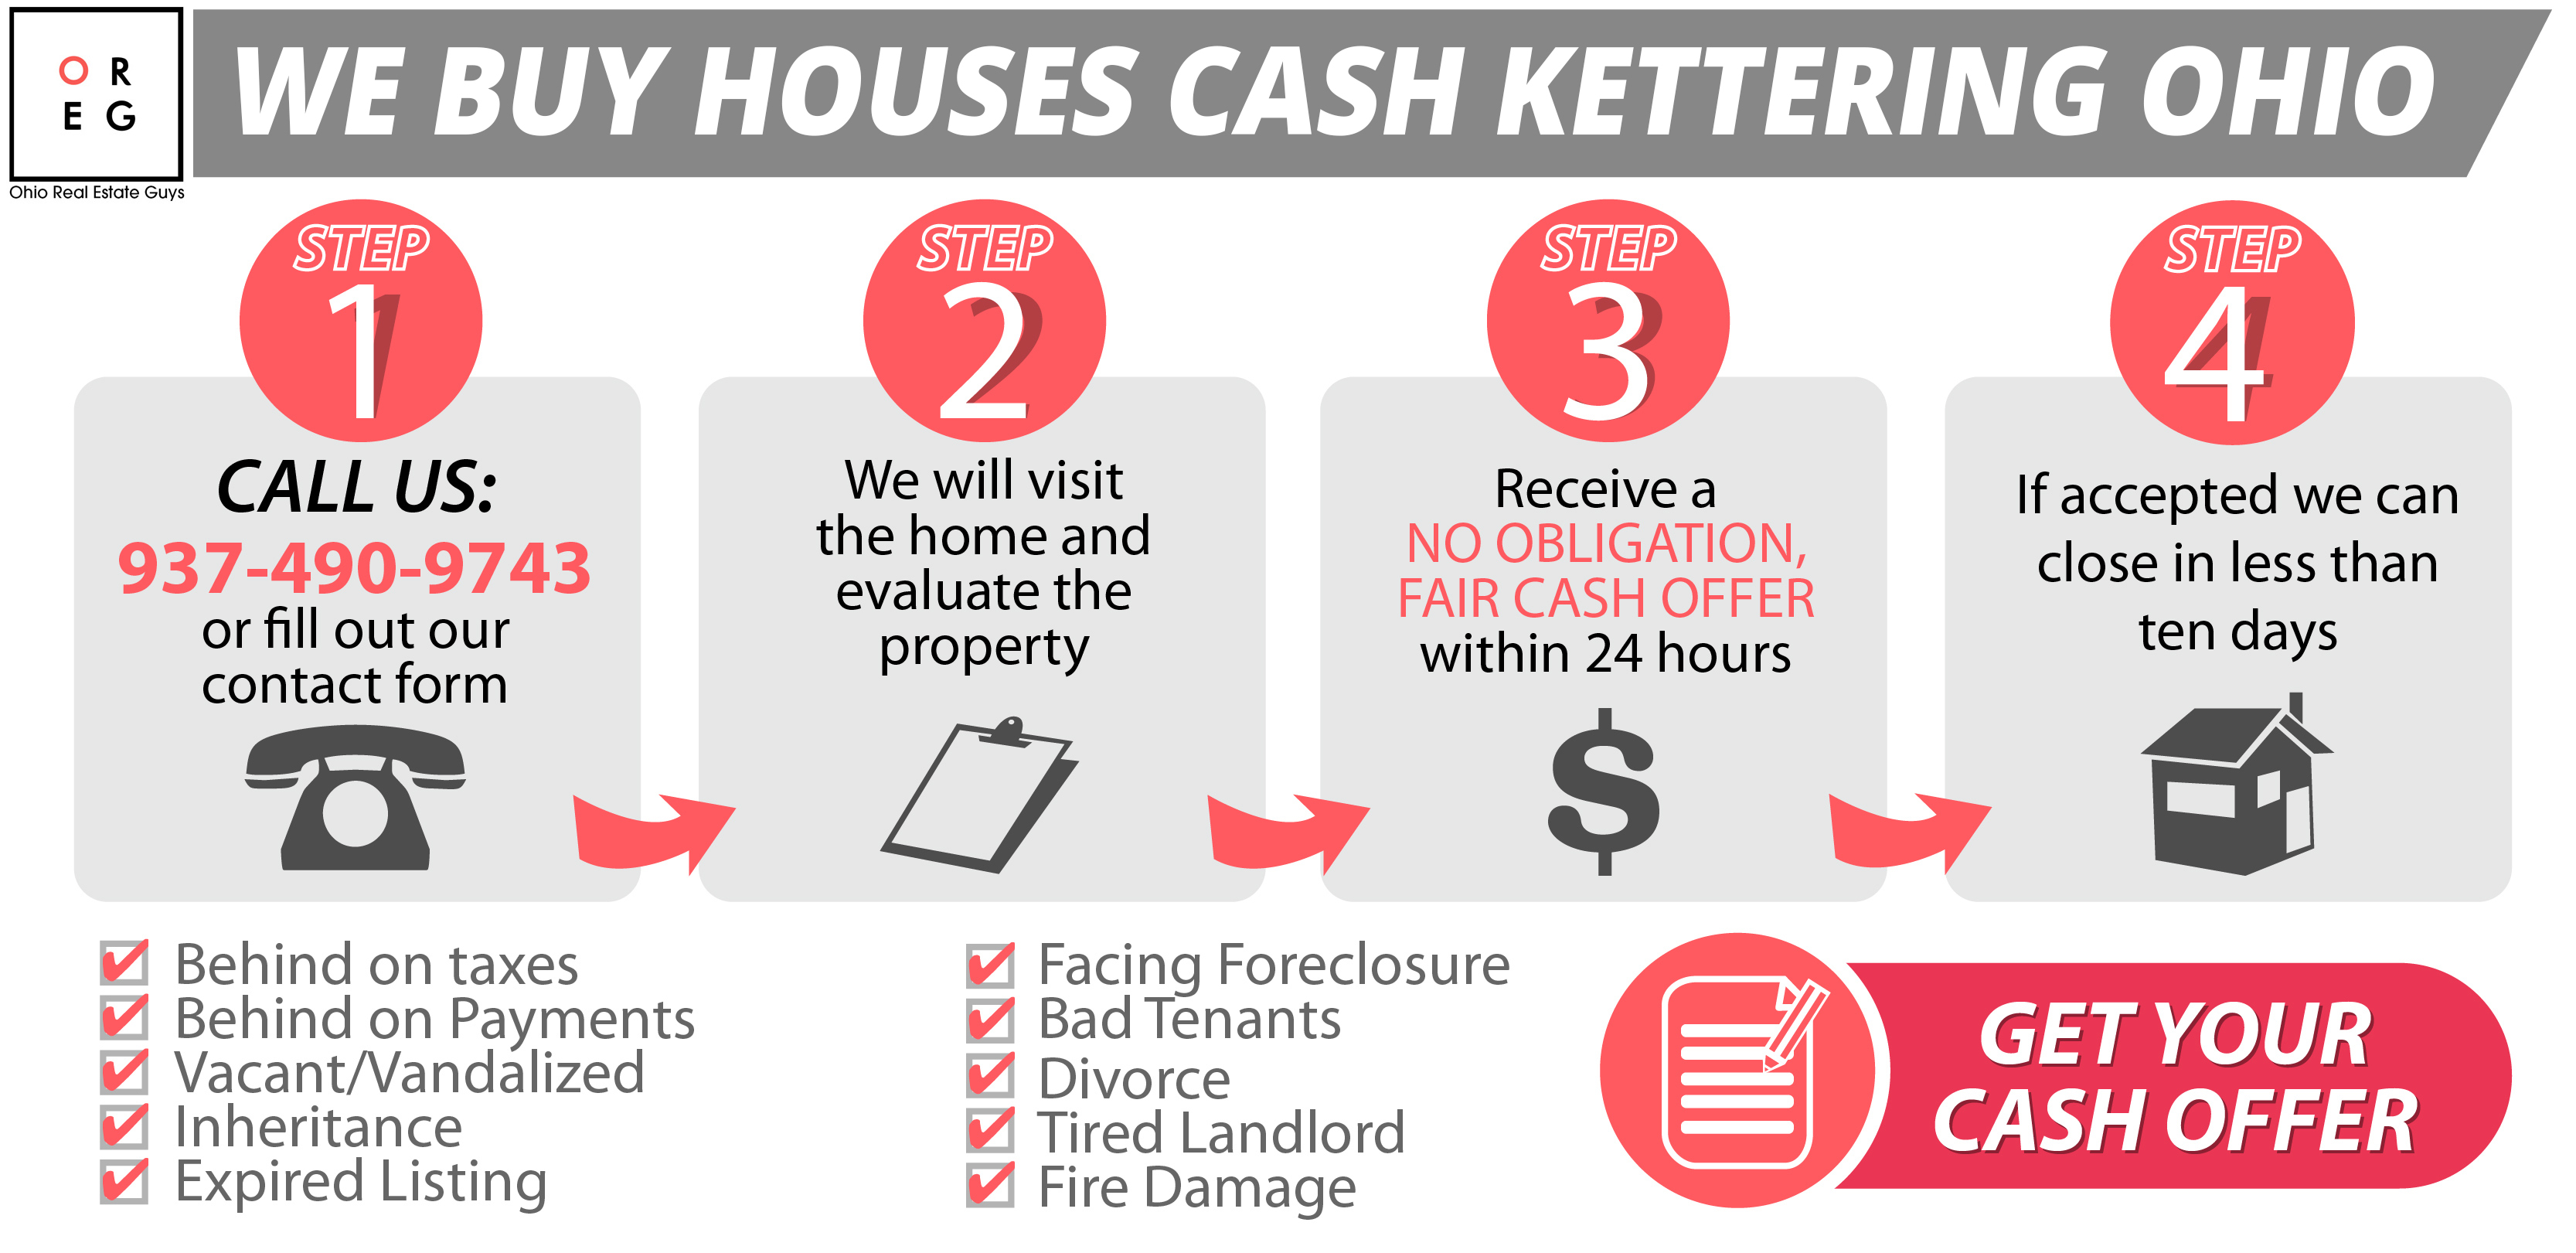 We Buy Houses Cash Kettering Ohio